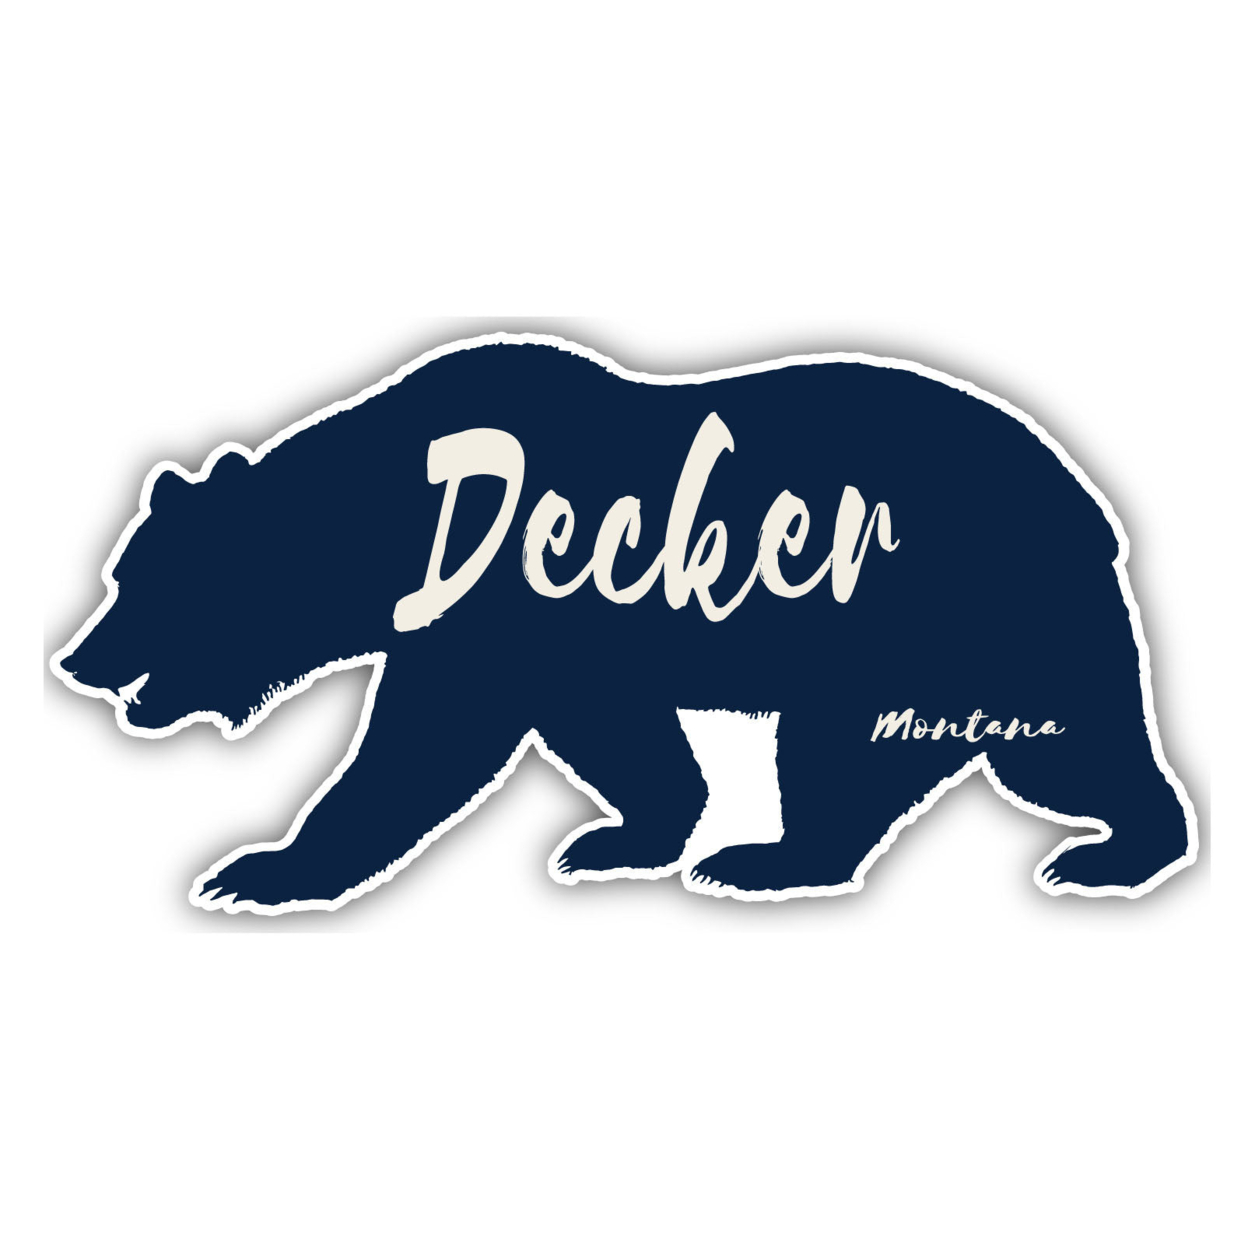 Decker Montana Souvenir Decorative Stickers (Choose Theme And Size) - Single Unit, 6-Inch, Bear